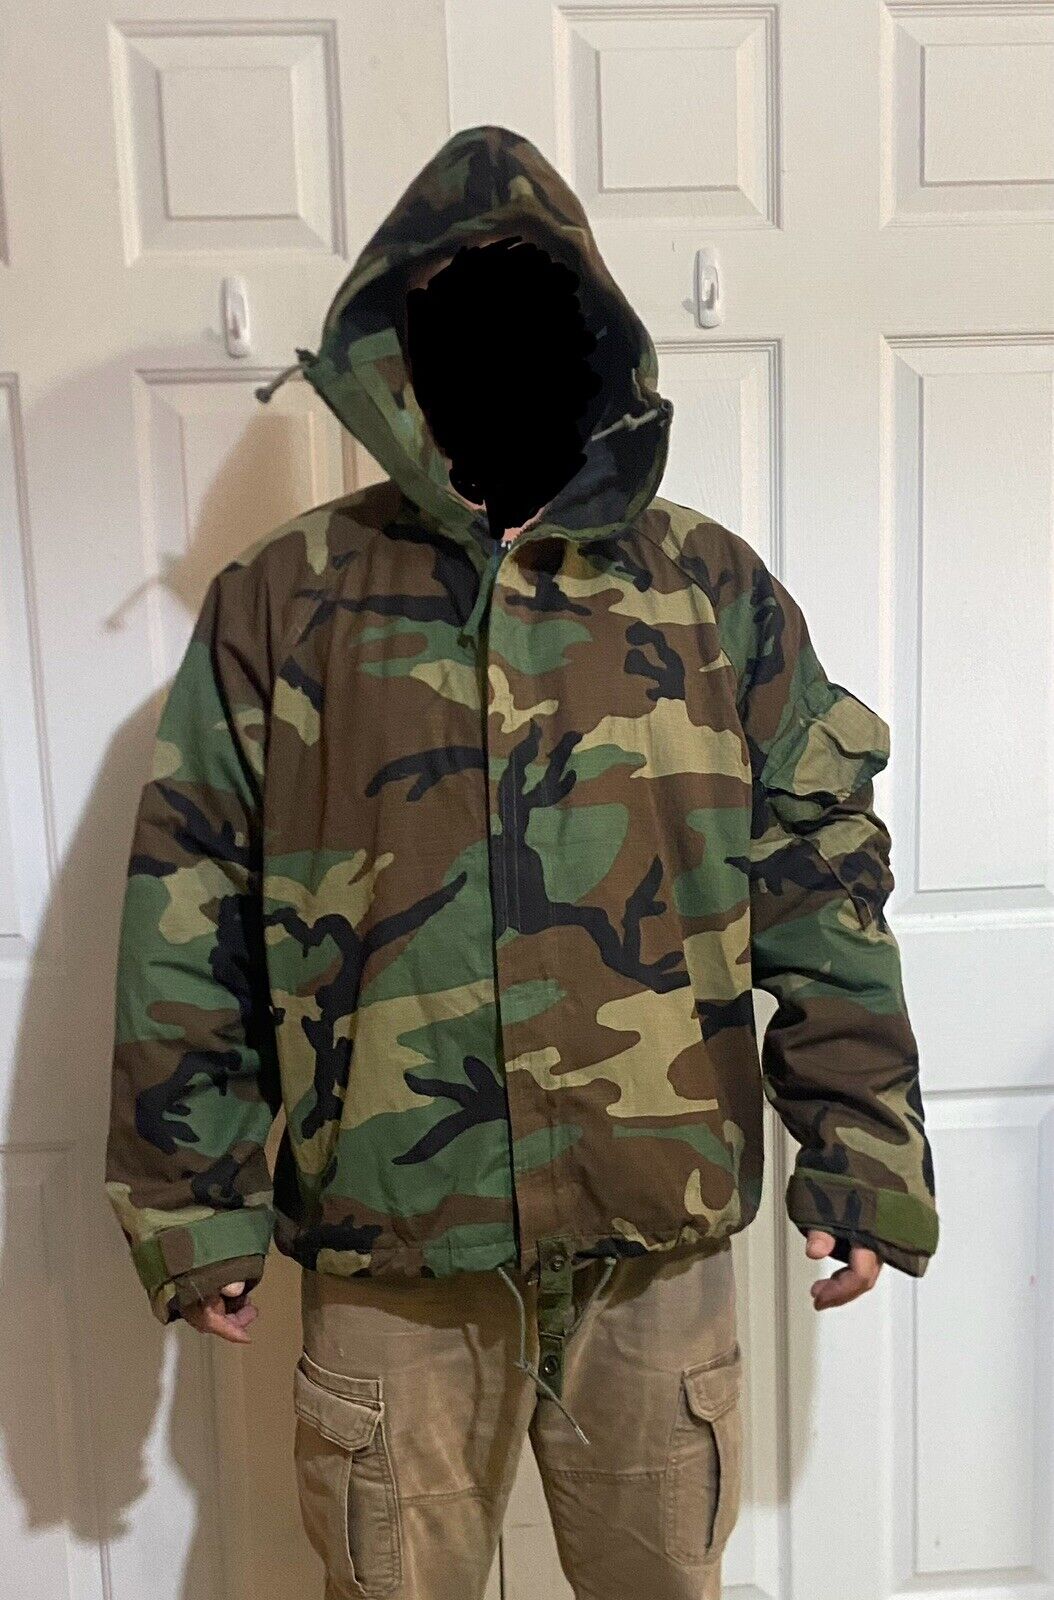 U.S. Military Chemical Protective Suit Coat - Woodland Camo, Size Medium Reg